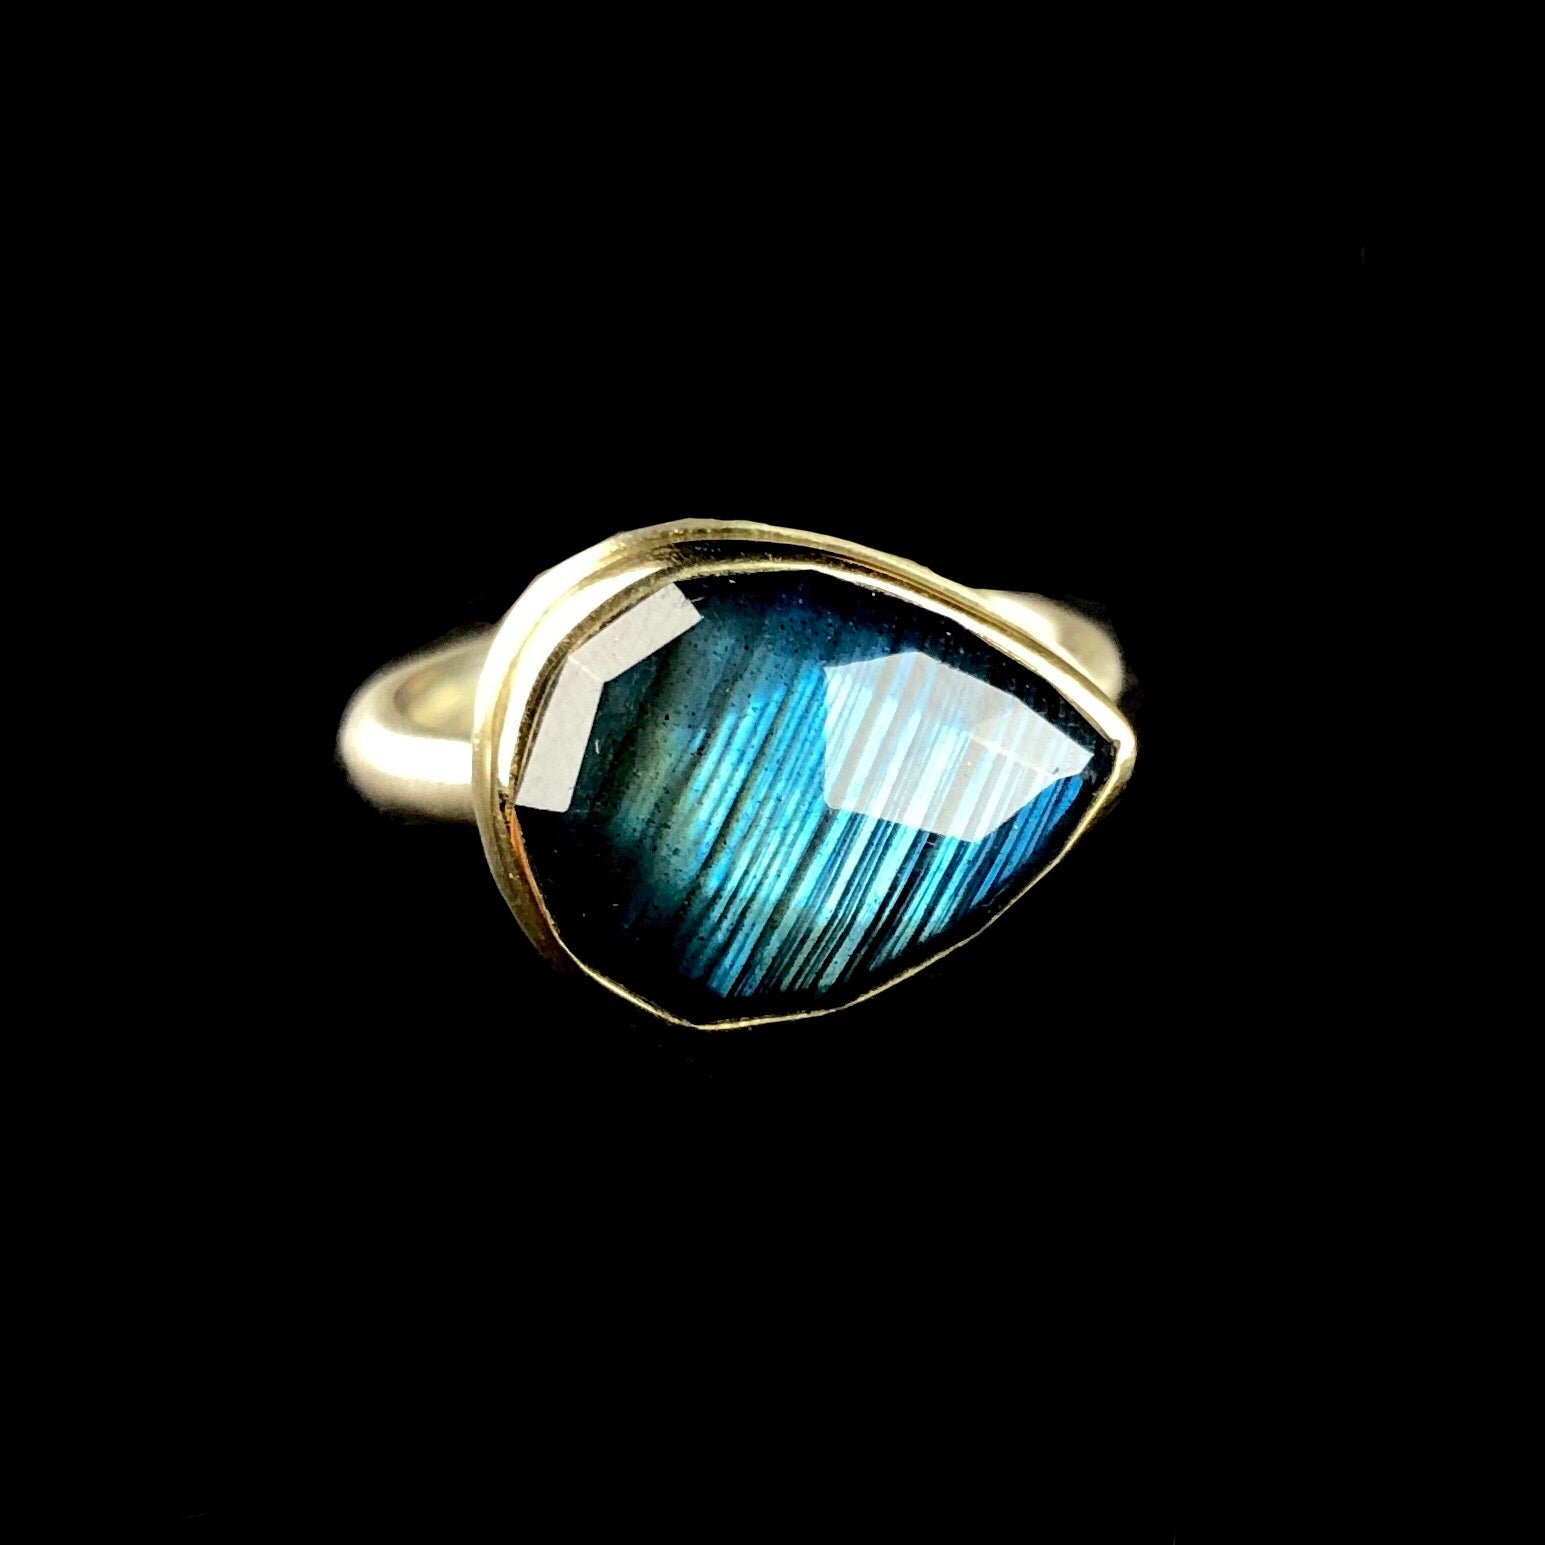 Teardrop shaped blue/green iridescent stone ring